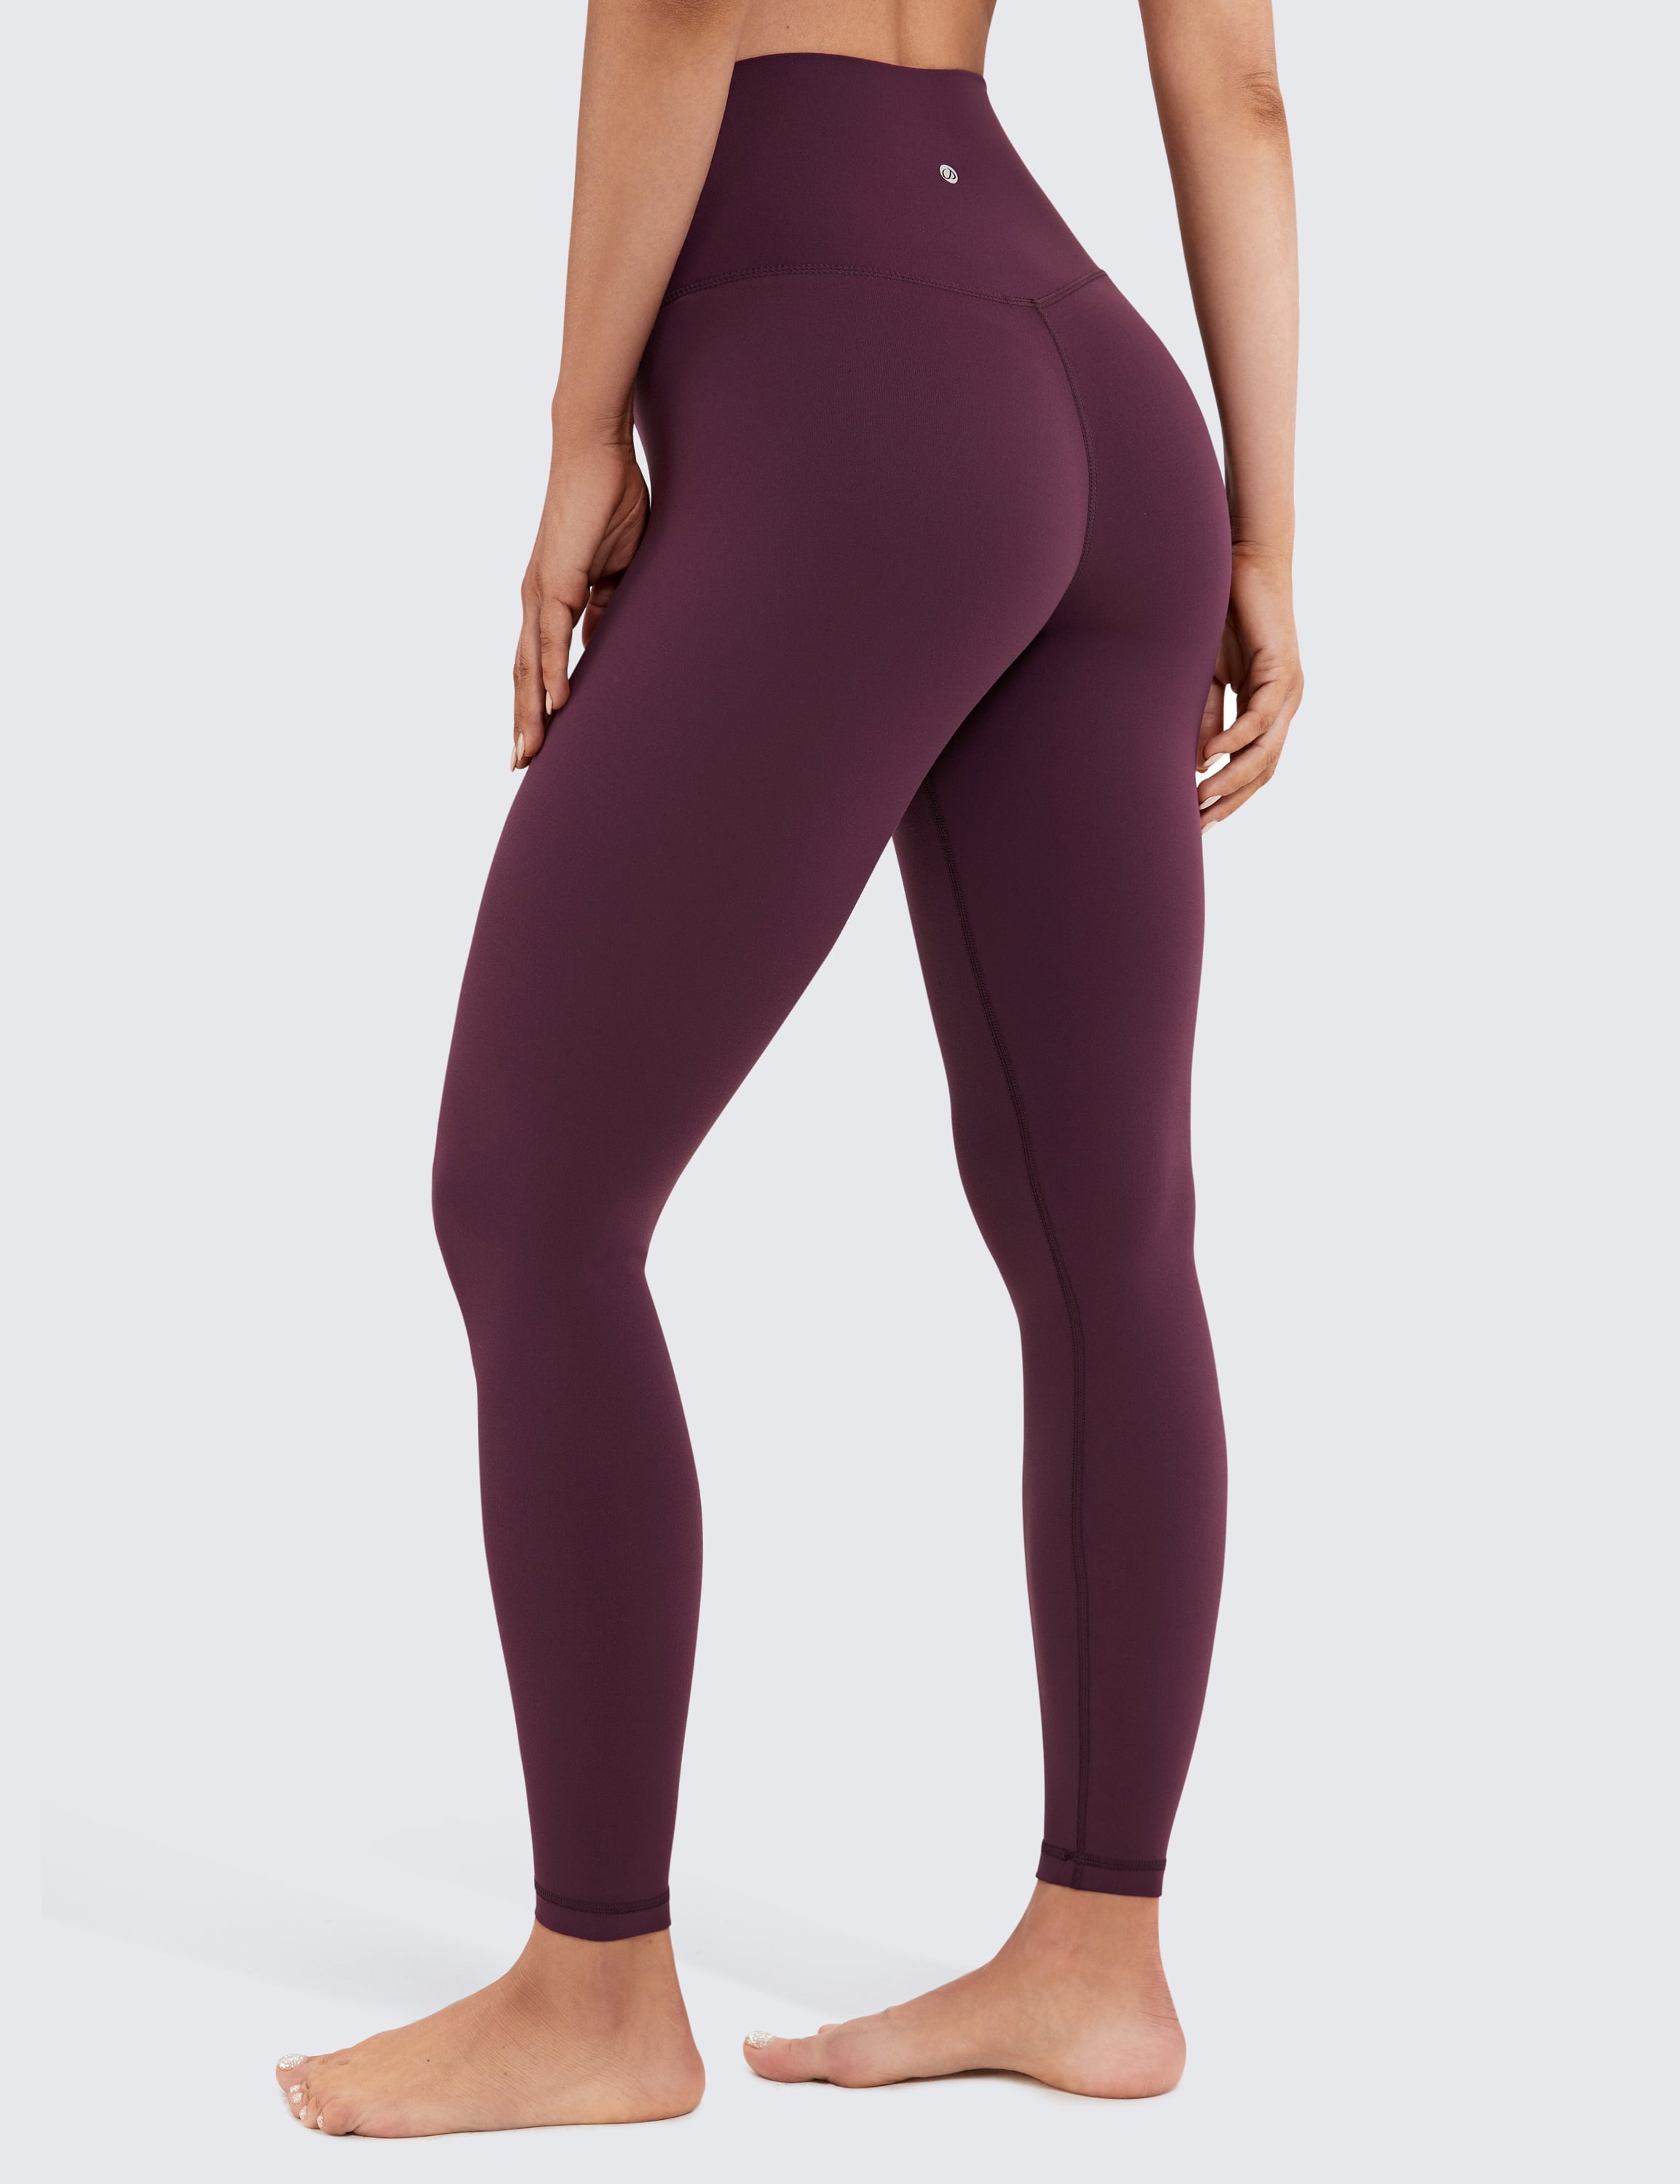 ZENEX High Waisted Leggings for Women Ultra Soft Workout Yoga Pants  Athletic Running Leggings Reg & Plus Size : : Clothing, Shoes 